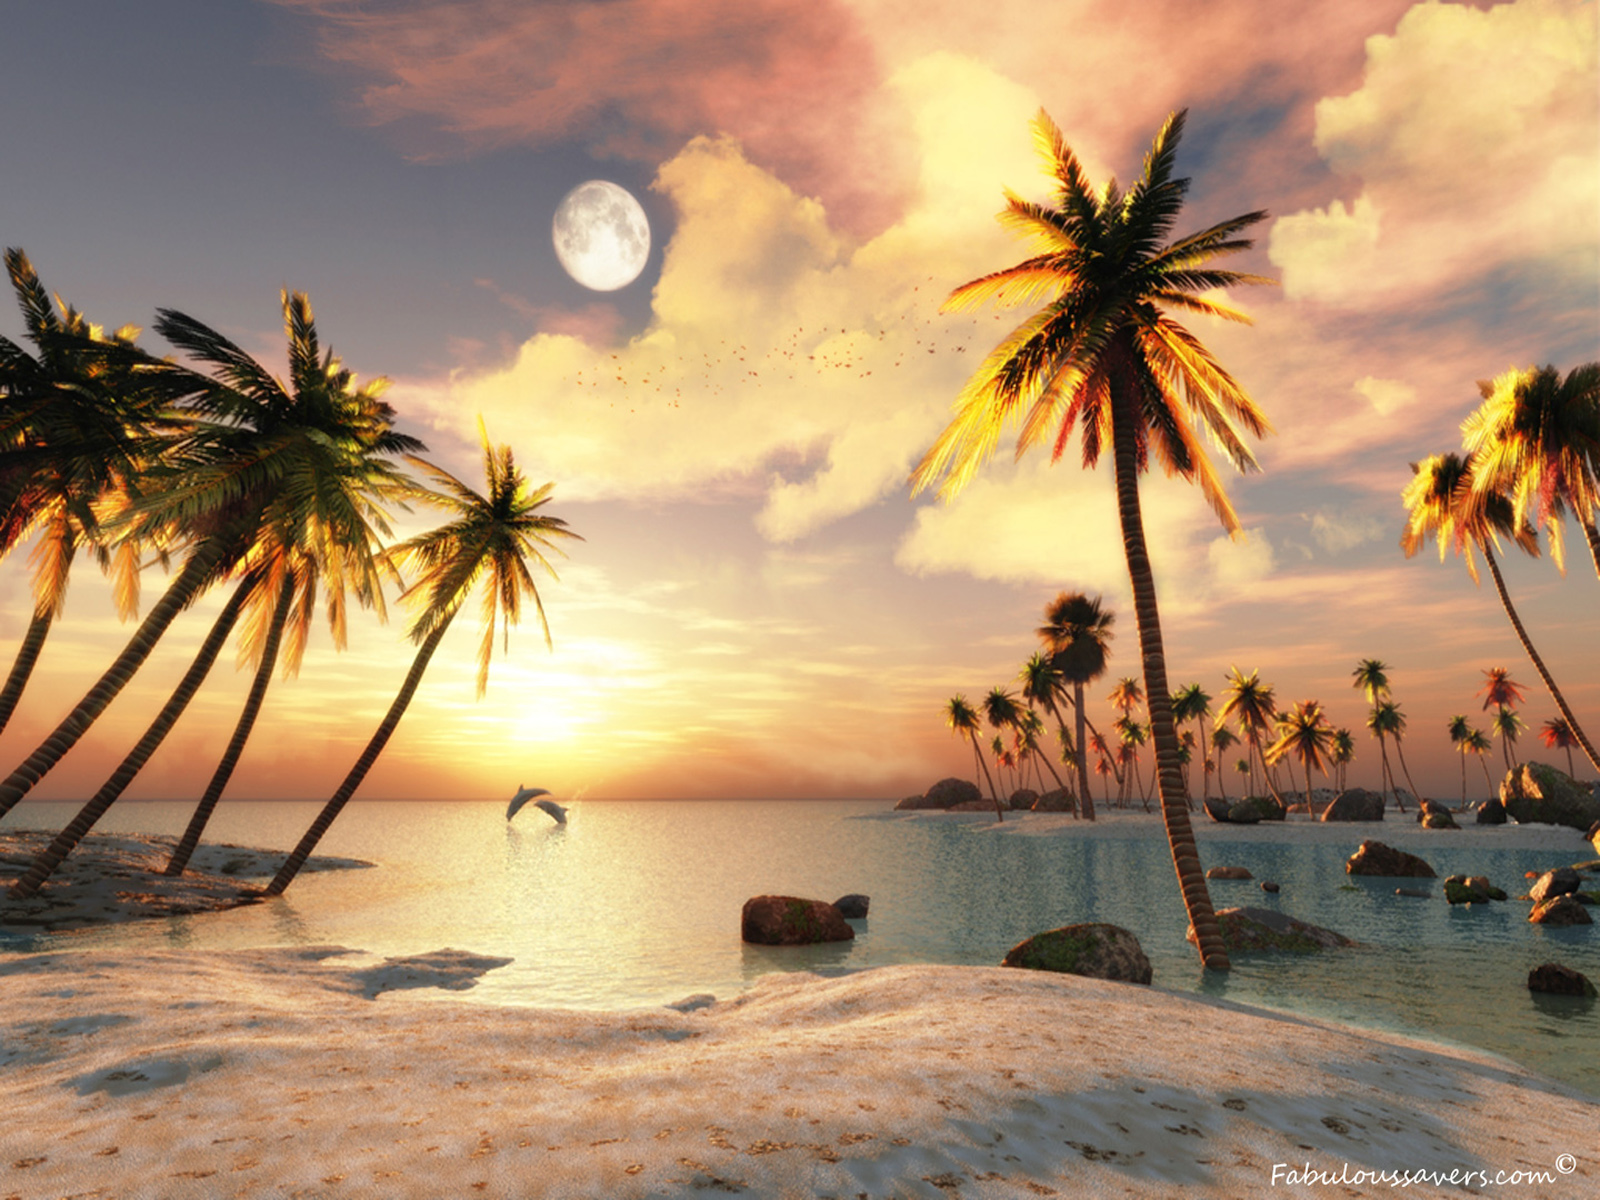 playa real de pantalla en vivo,cielo,naturaleza,paisaje natural,árbol,palmera